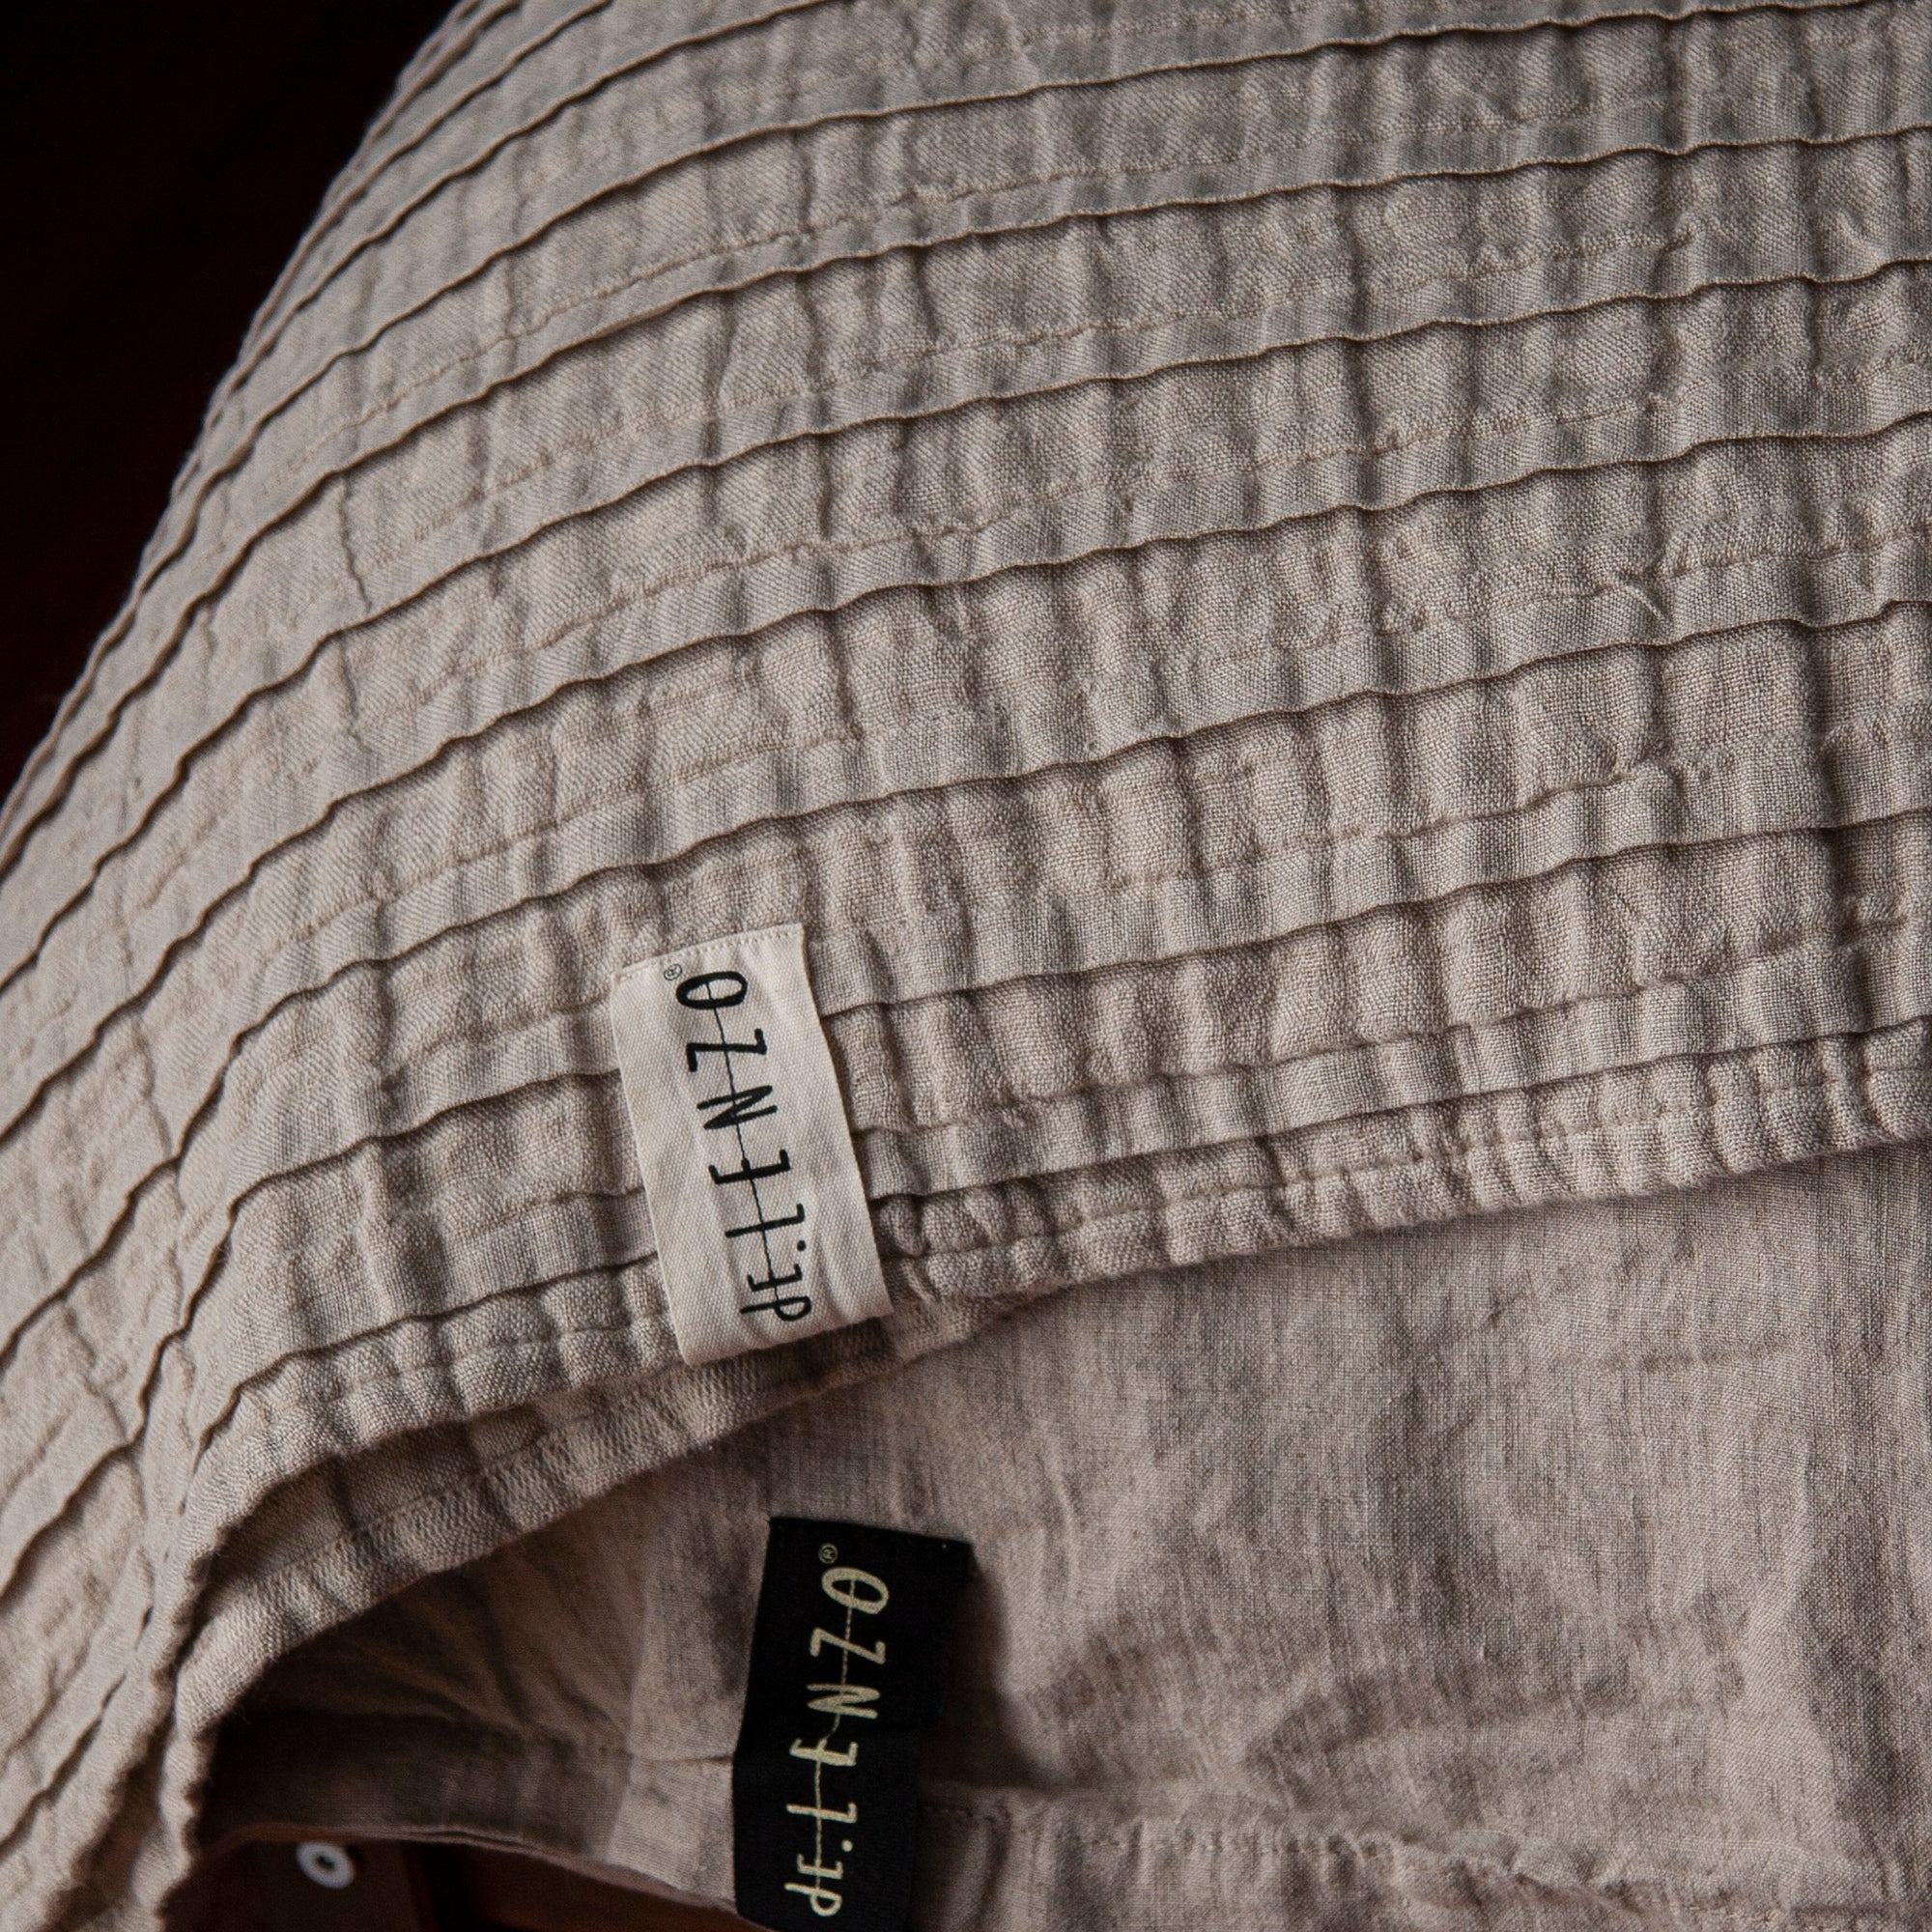 Foto de detalle de lino plisado para colcha.